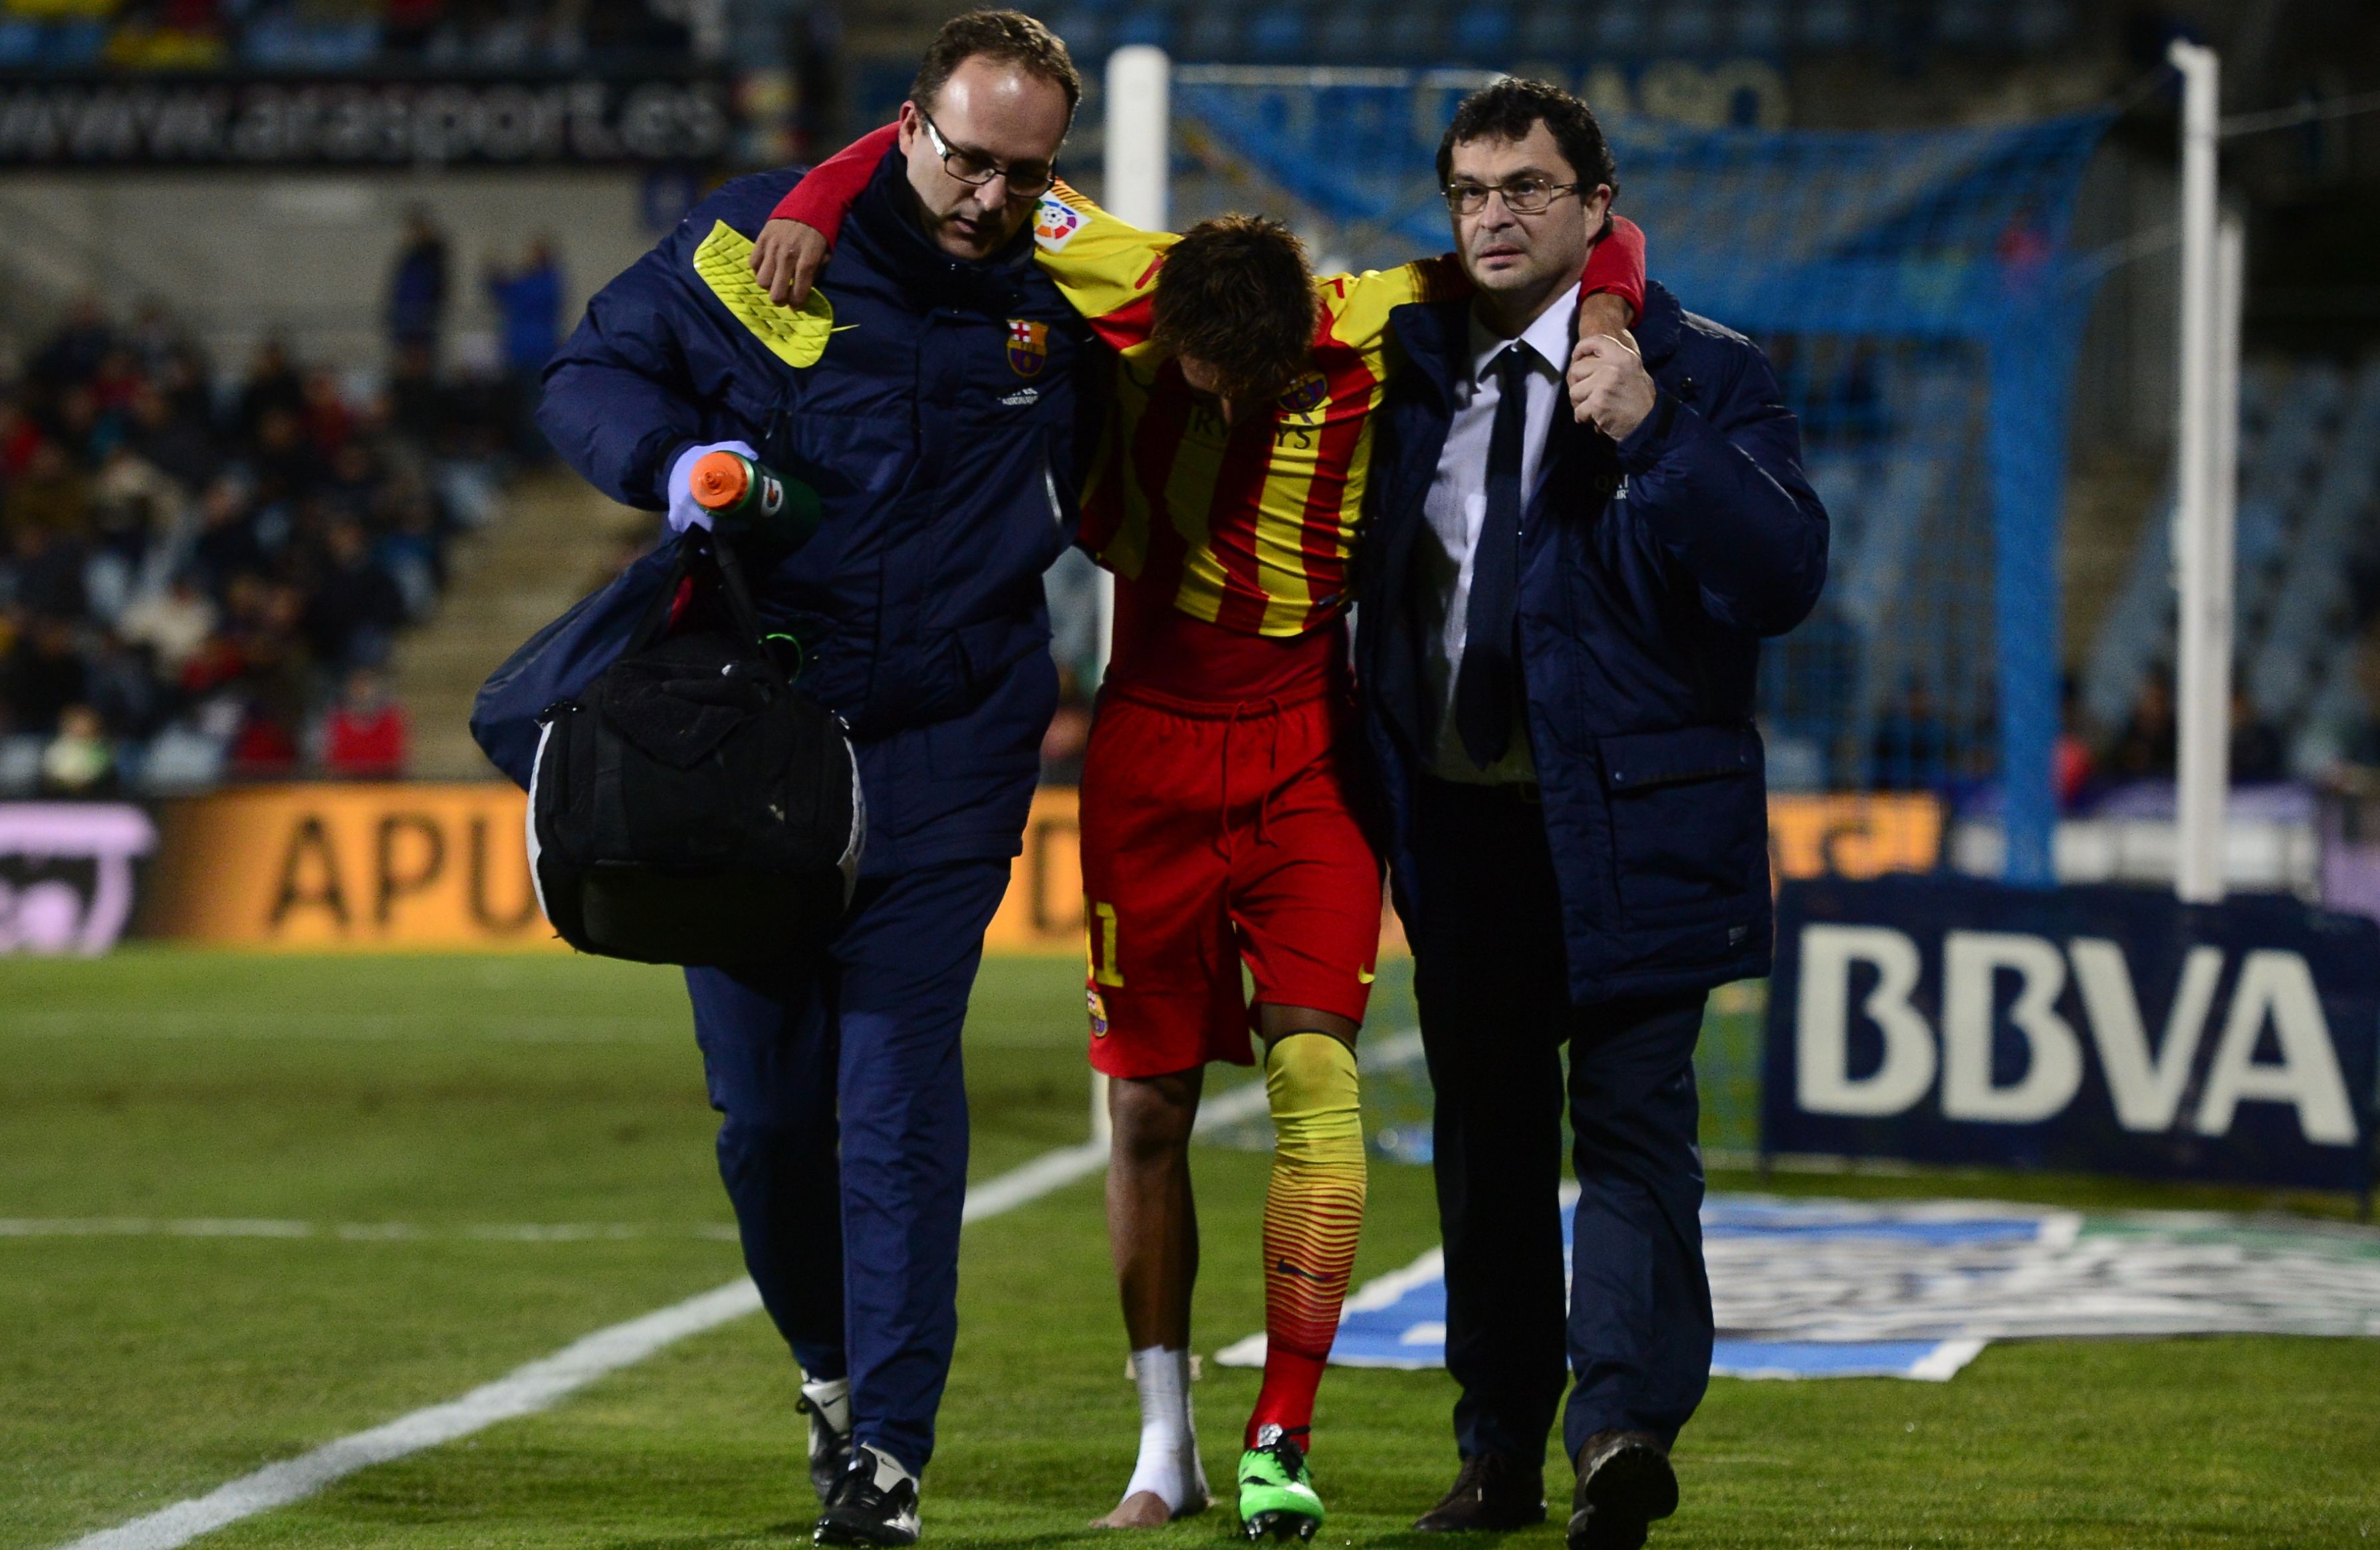 Neymar suffers ankle injury against Getafe | FourFourTwo